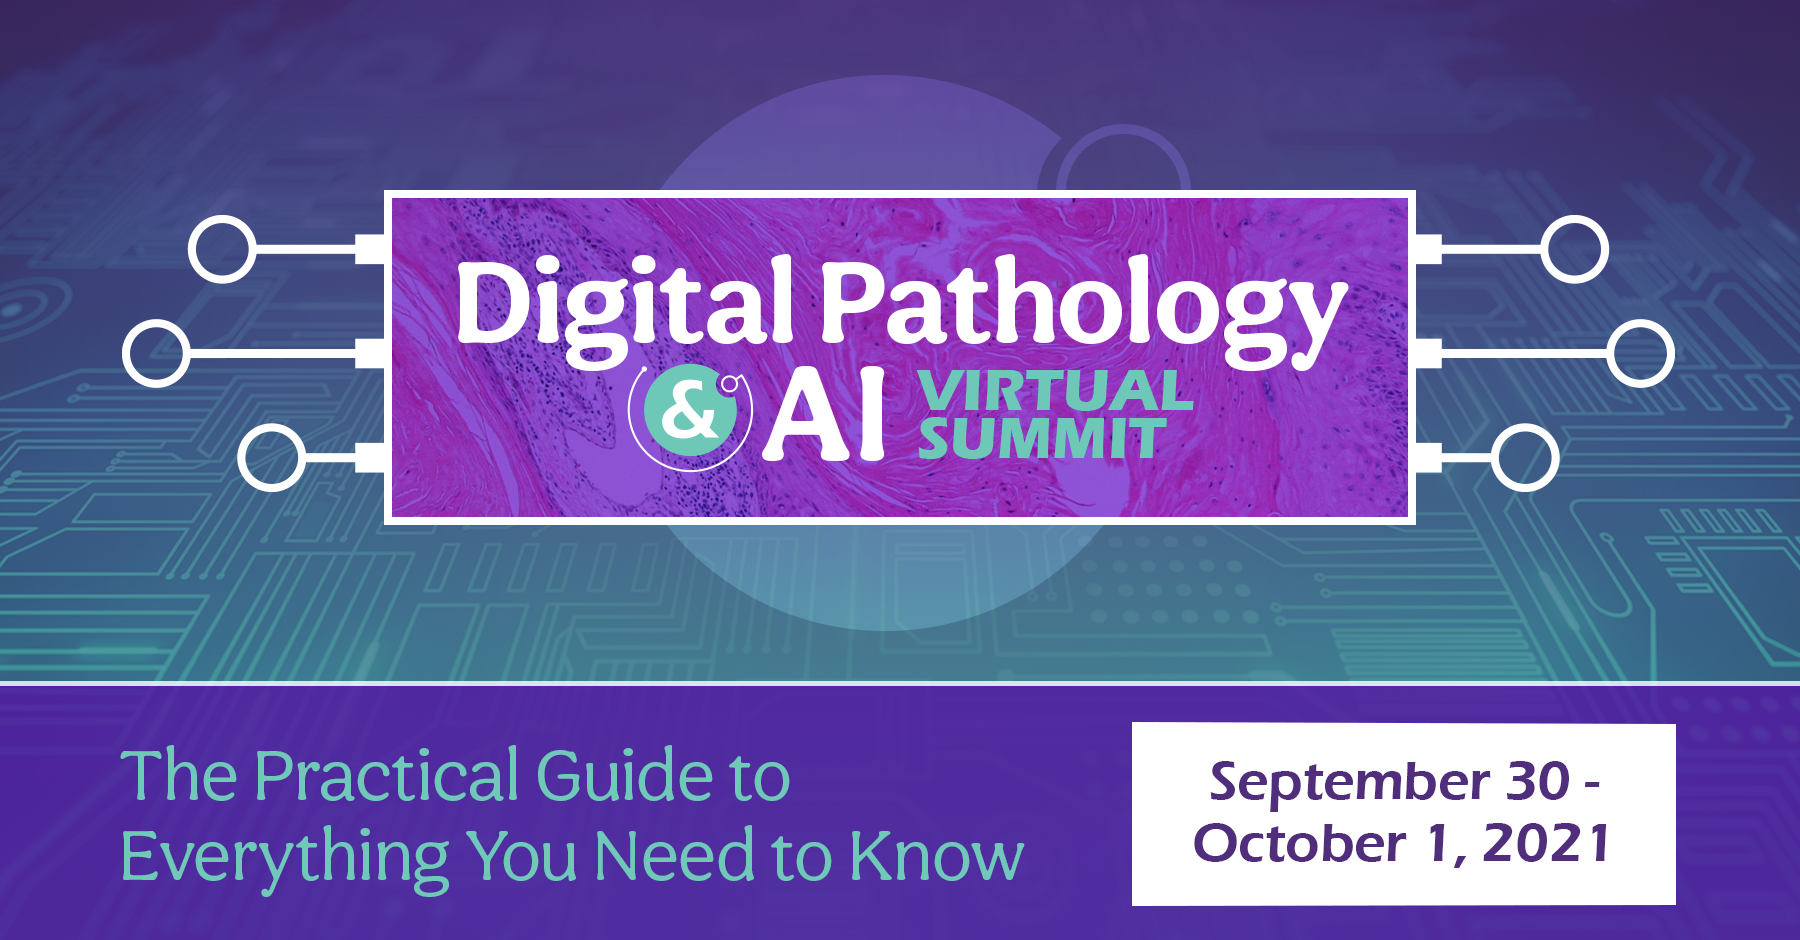 Digital Pathology and AI Virtual Summit